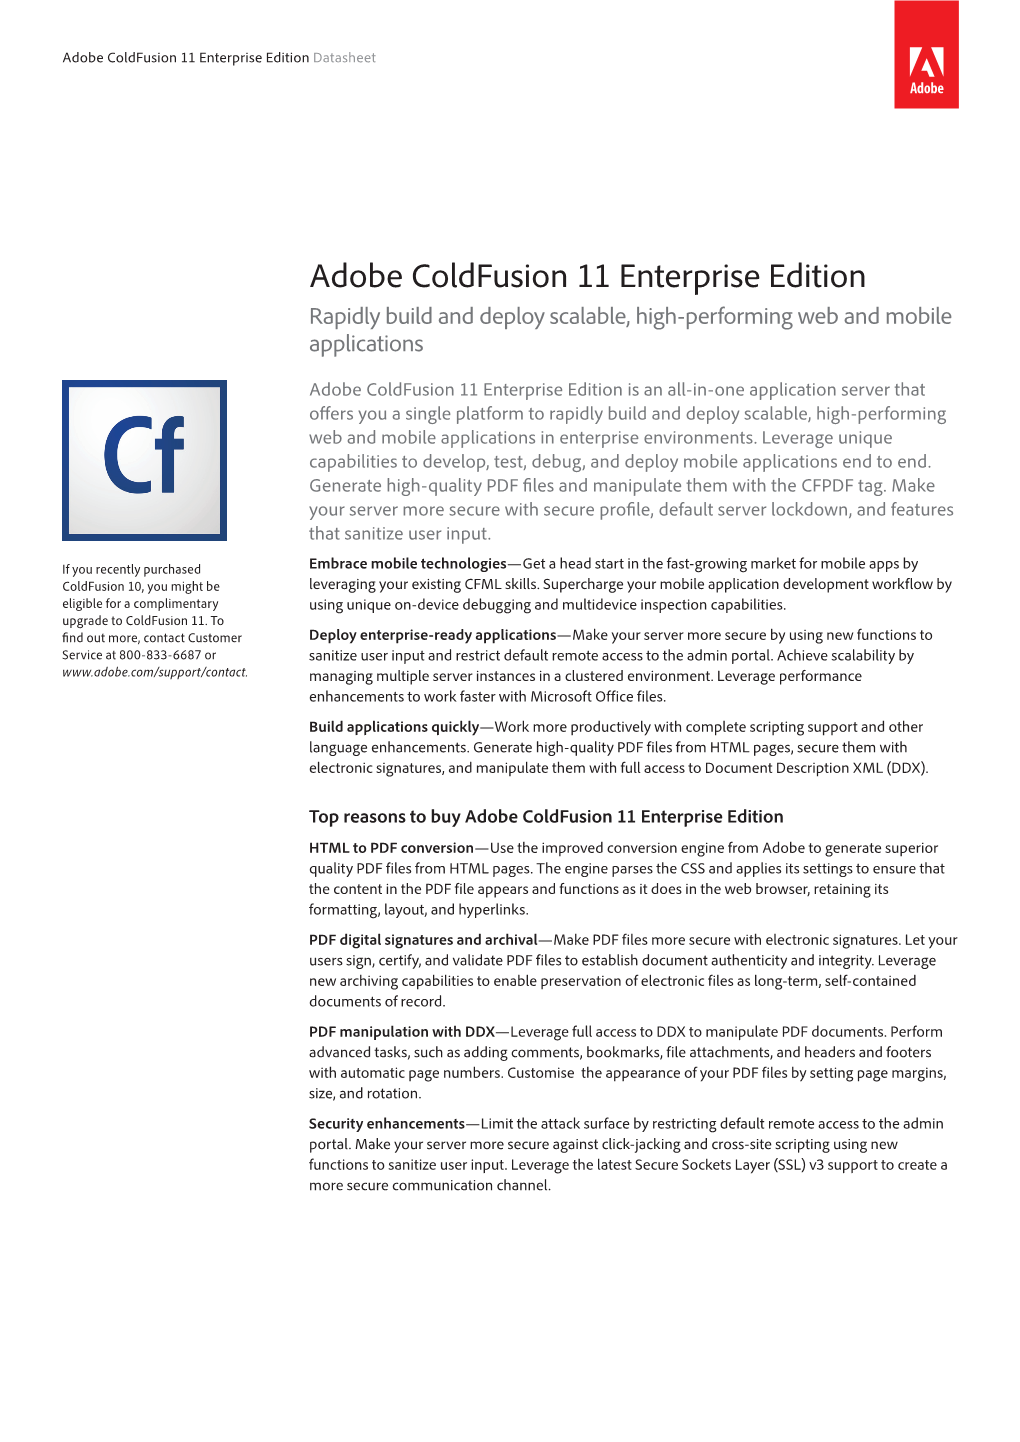 Adobe Coldfusion 11 Enterprise Edition Datasheet